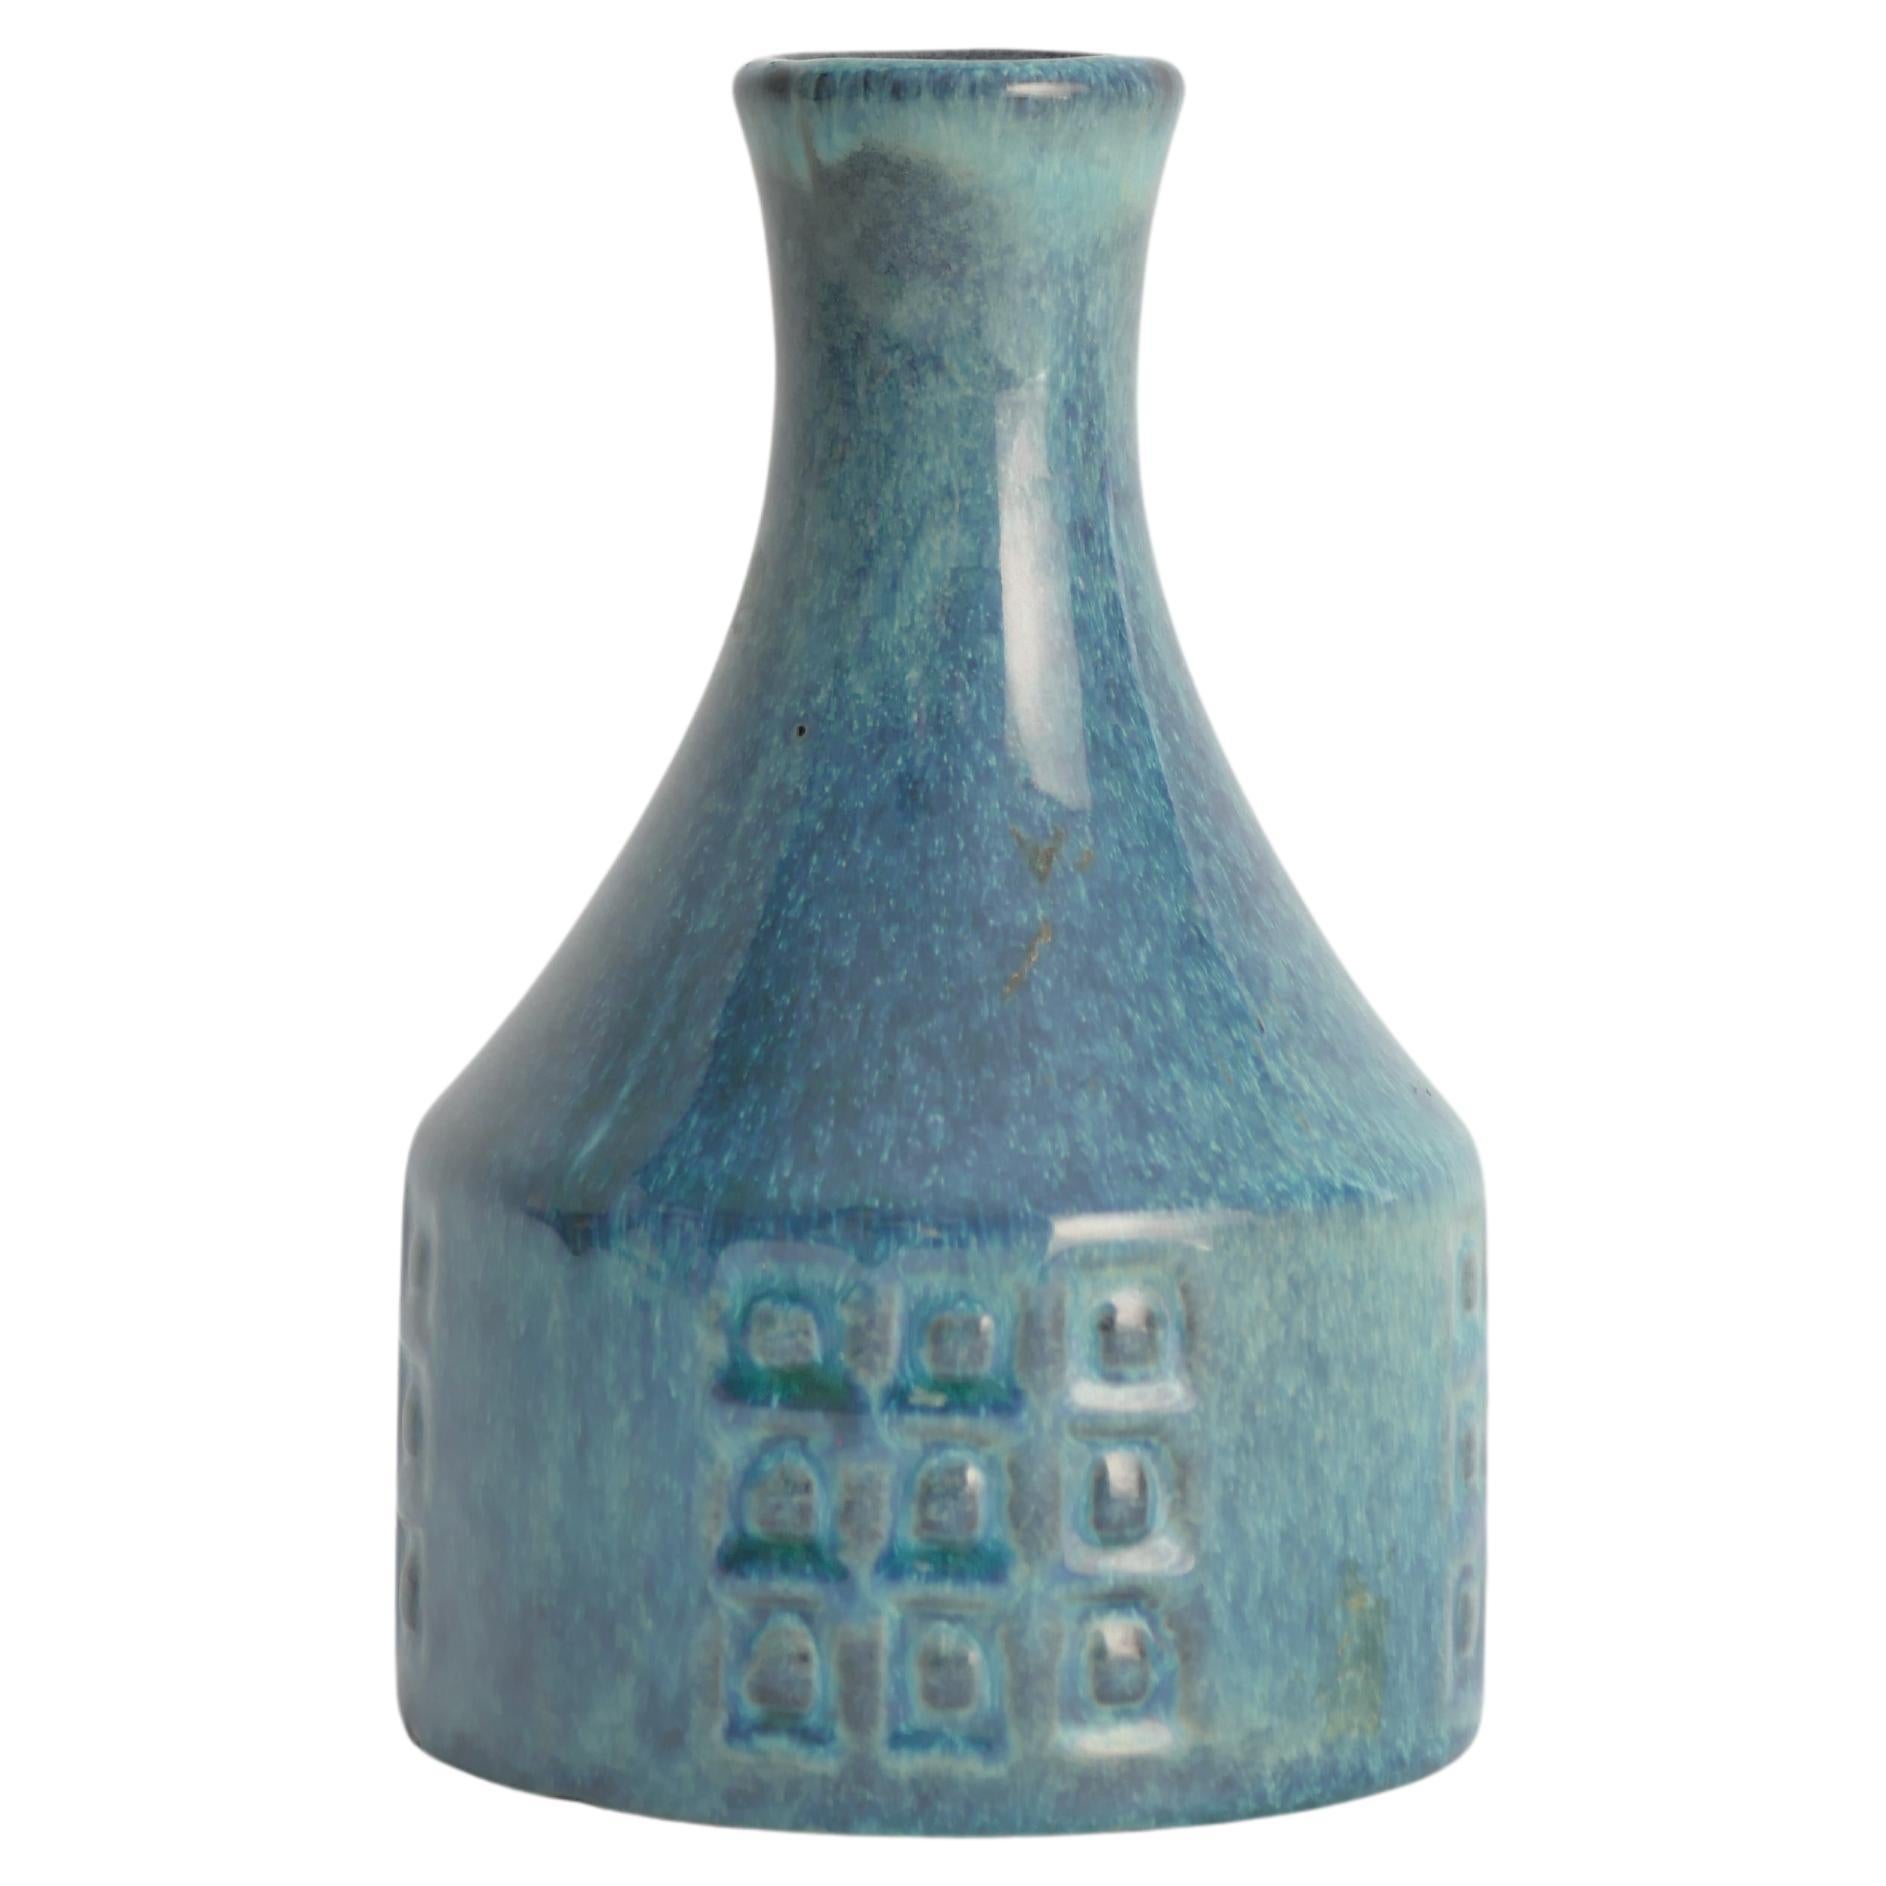 Scandinavian Modern Ceramic Vase with Shimmering Turquoise Glaze by JIE Gantofta